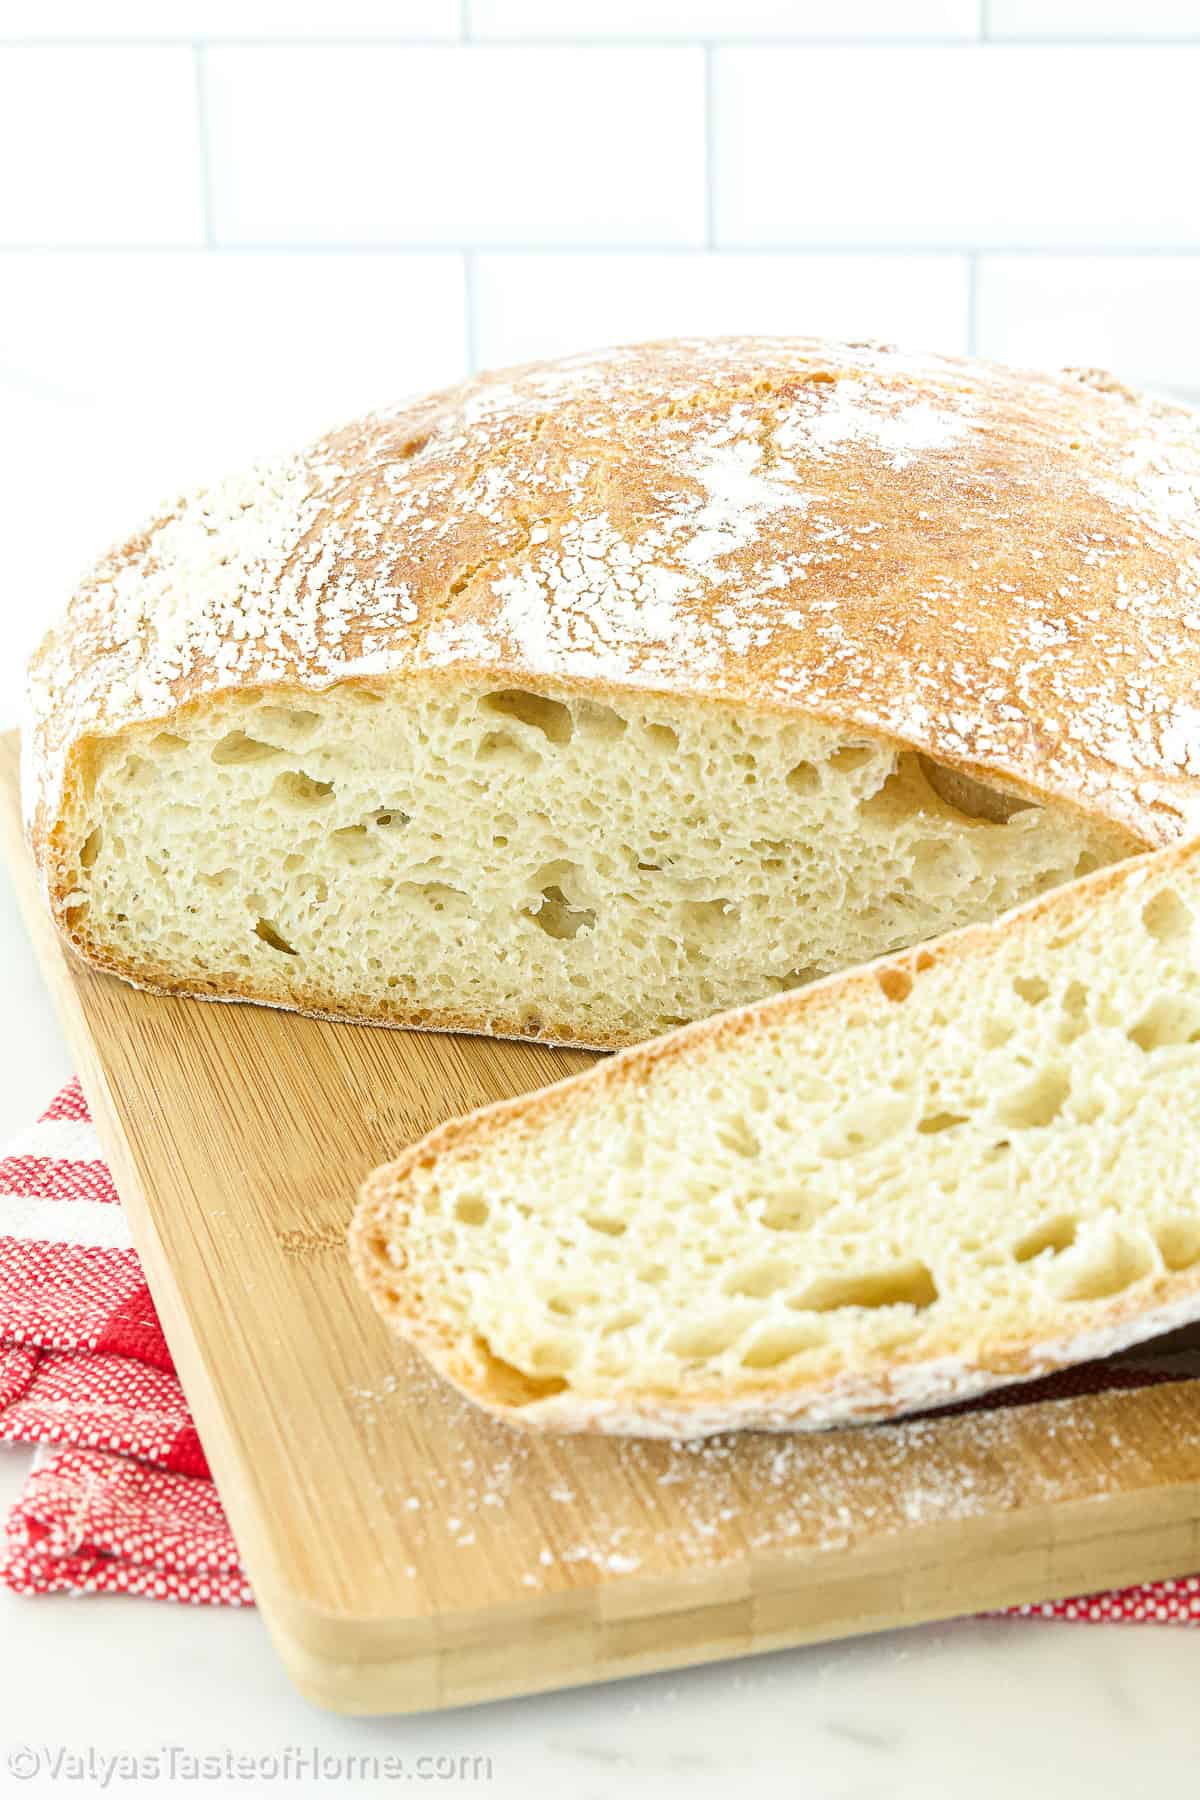 Dutch Oven Crusty Bread